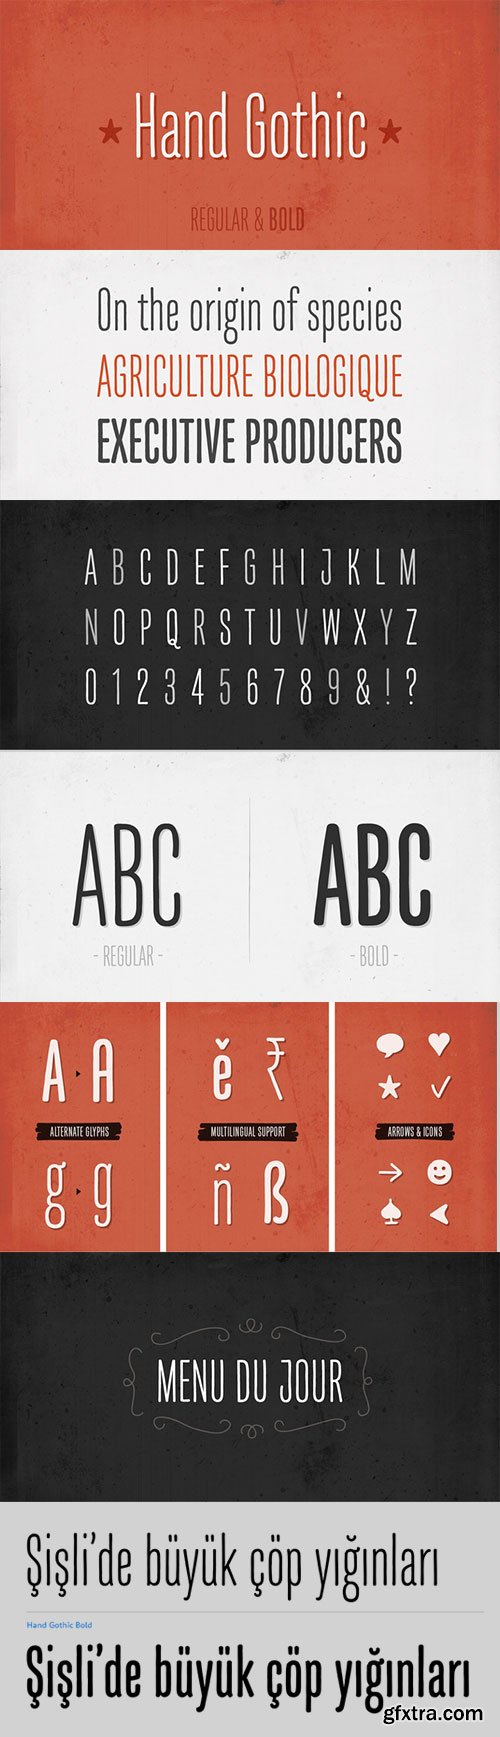 Hand Gothic - New Condensed Typeface 2xOTF $42